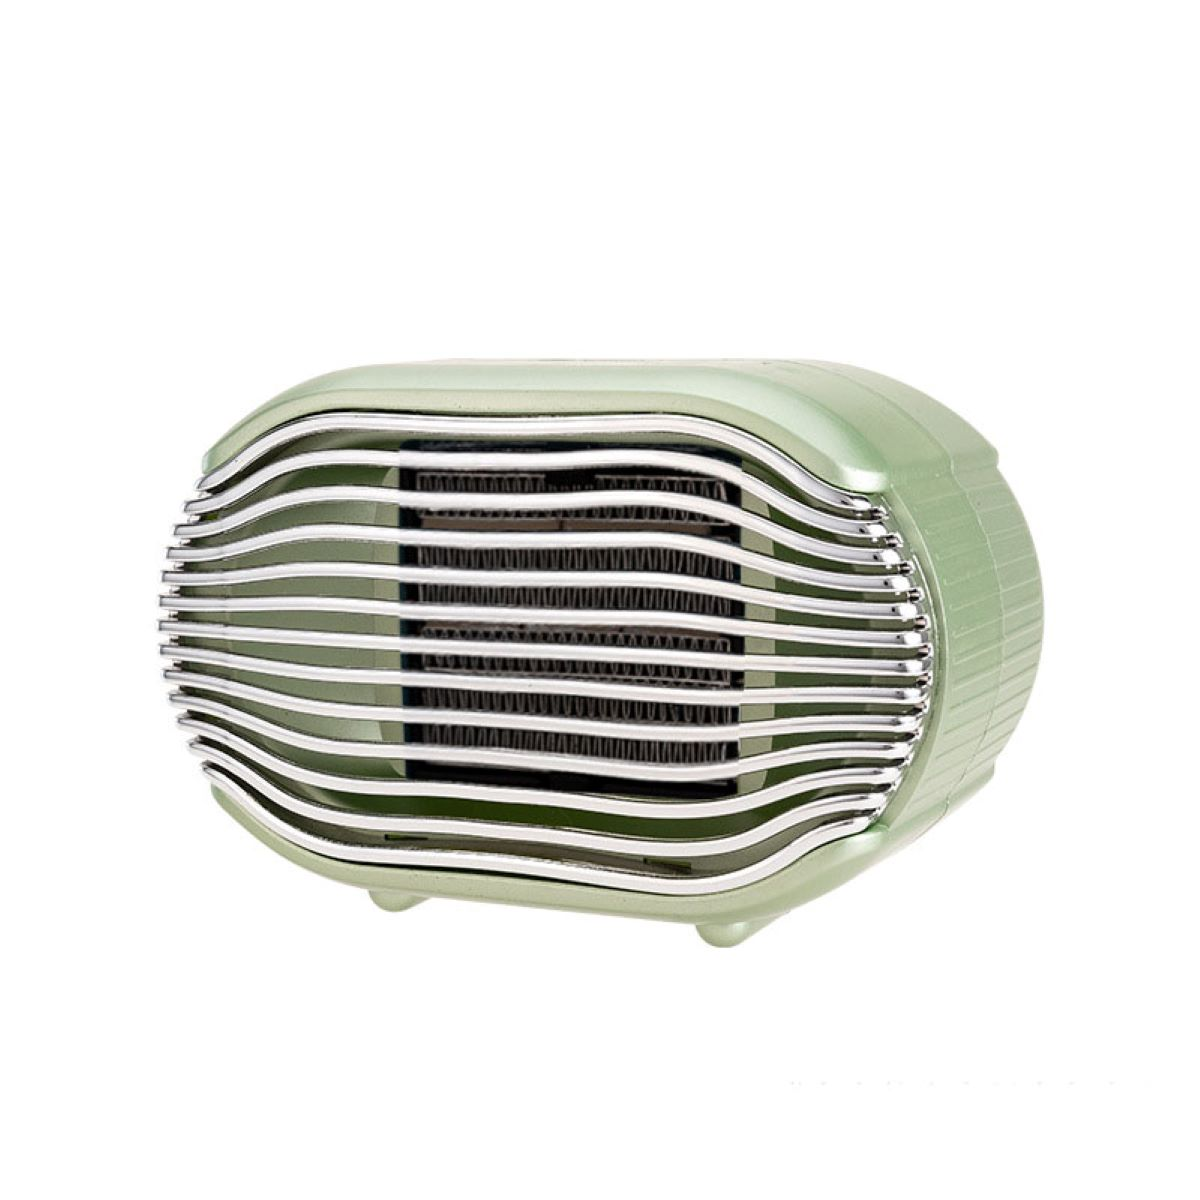 LACAMAX Grünes PTC-Keramik-Heizgerät - schnelle Wärme Wärme, 10 m²) (800 Heizlüfter Watt, leise Raumgröße